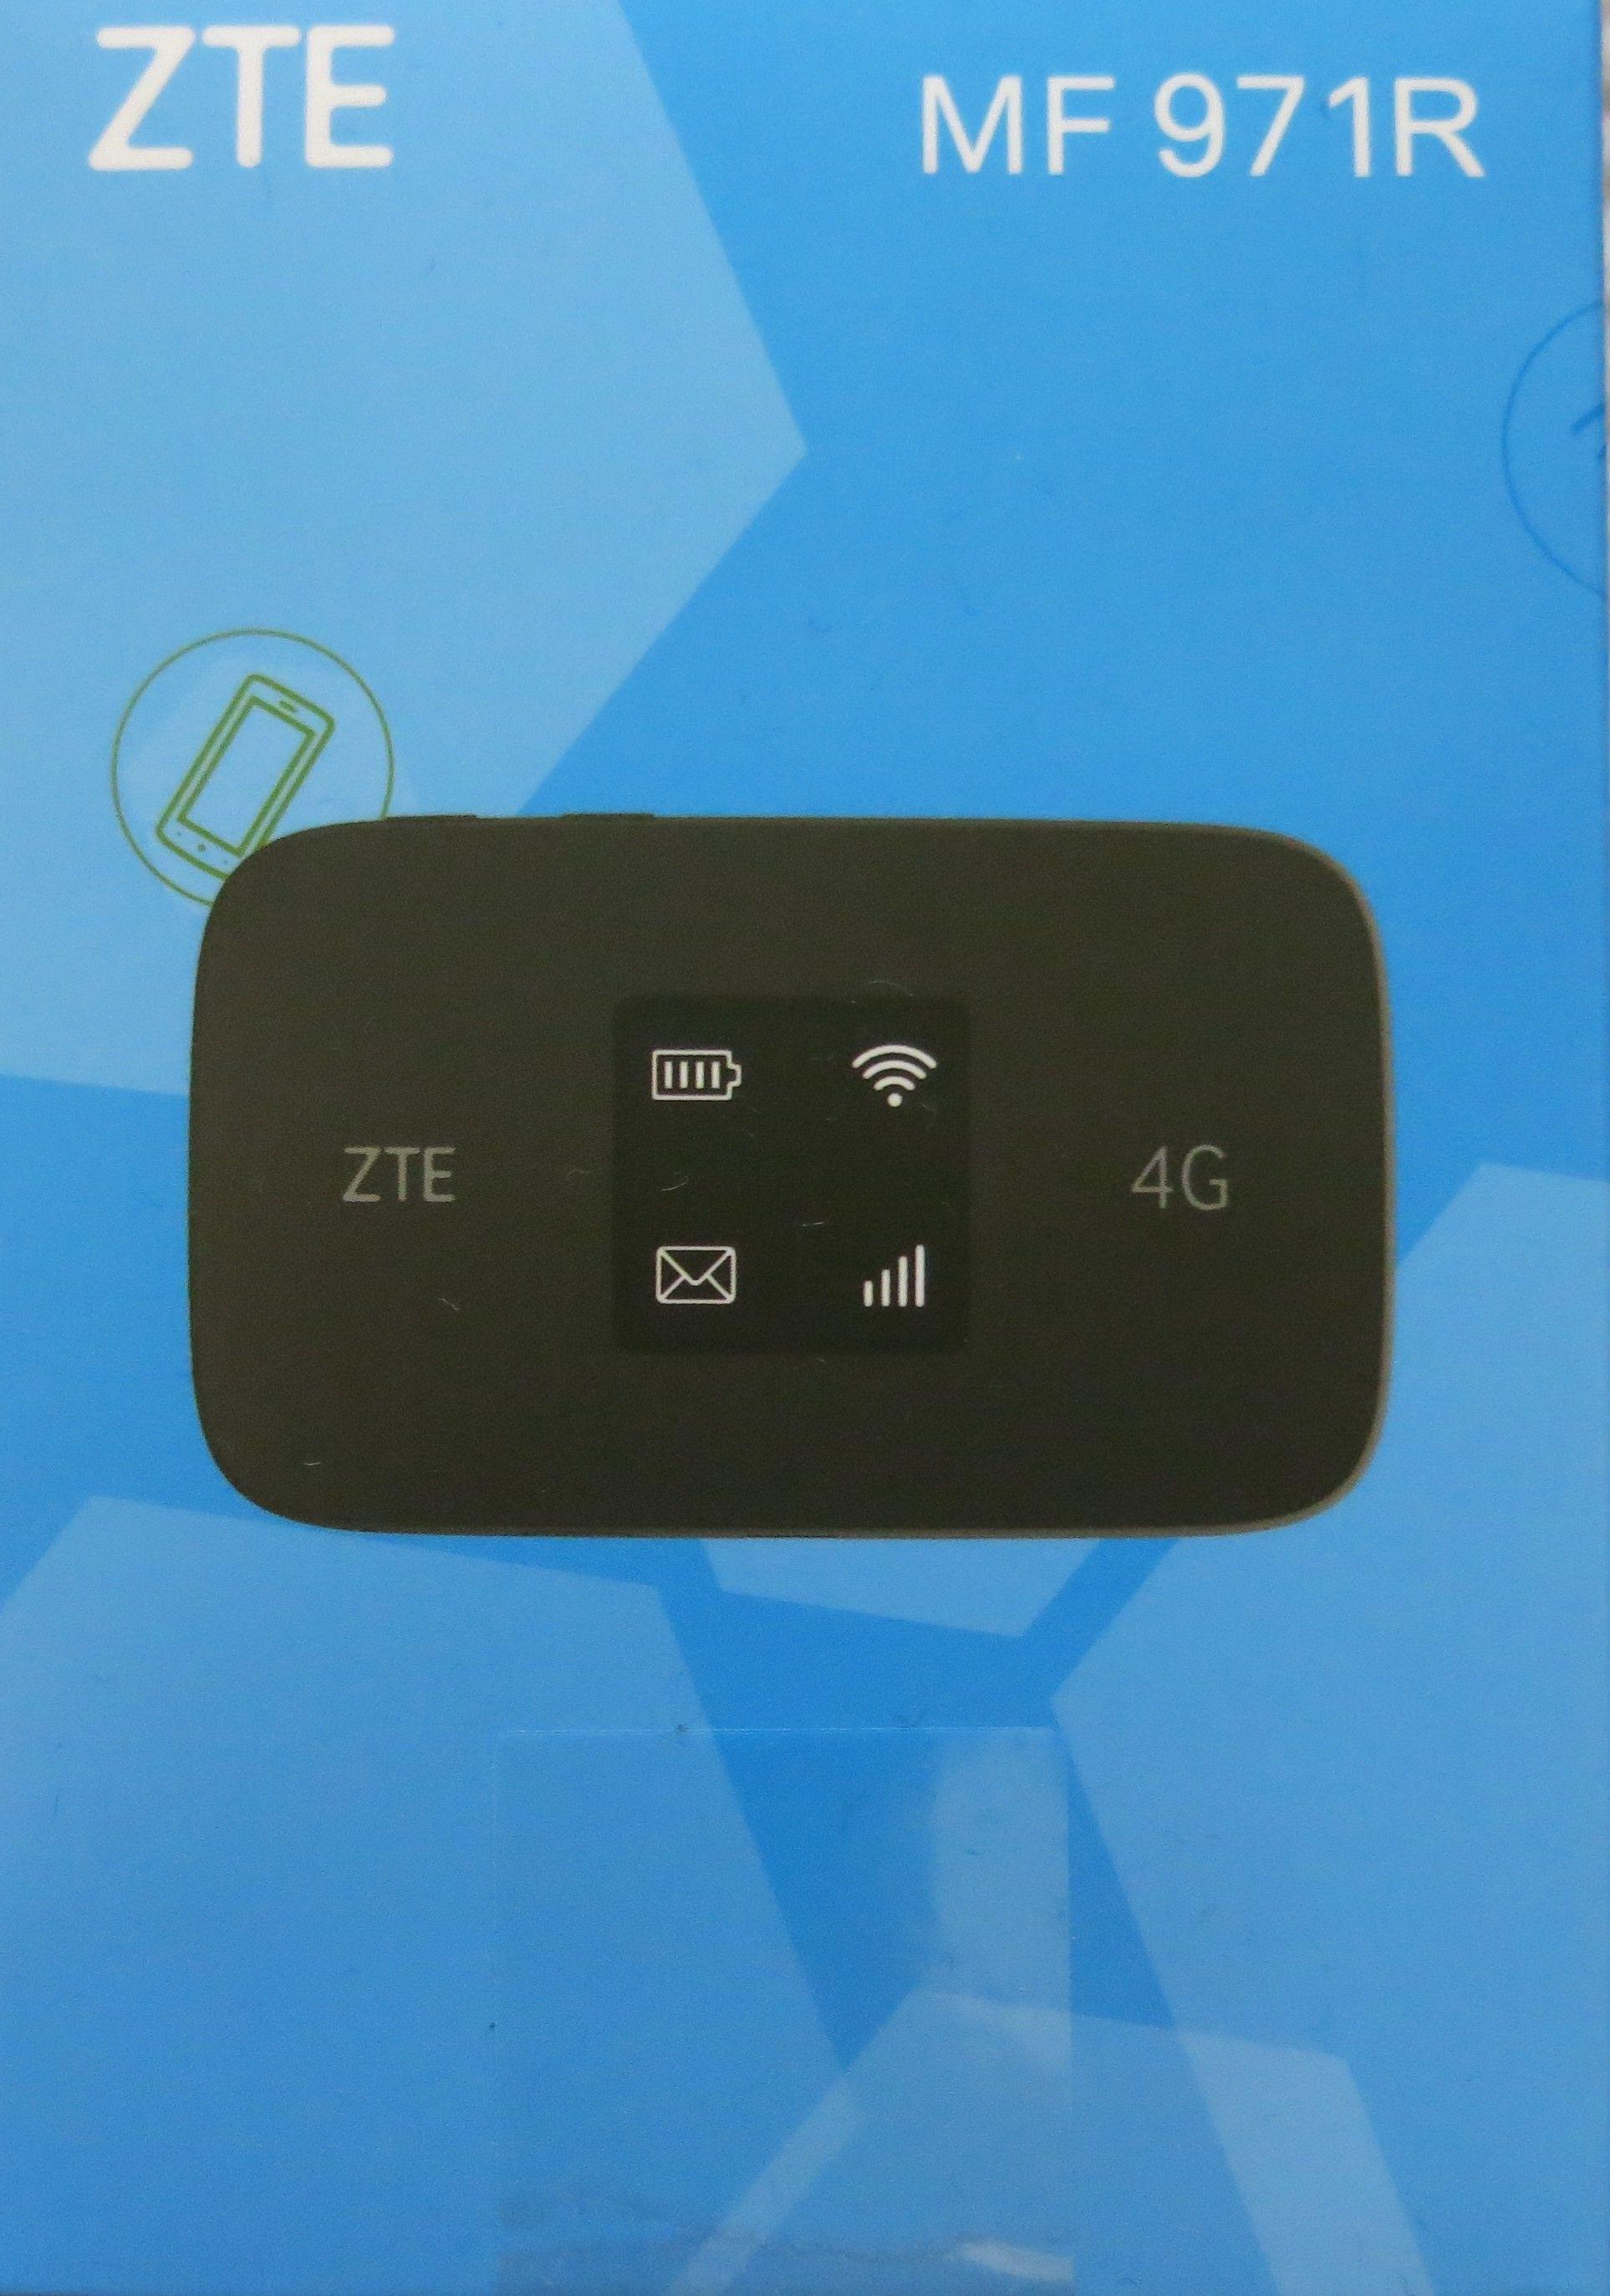 Portable Router ZTE MF971R 4G LTE - black